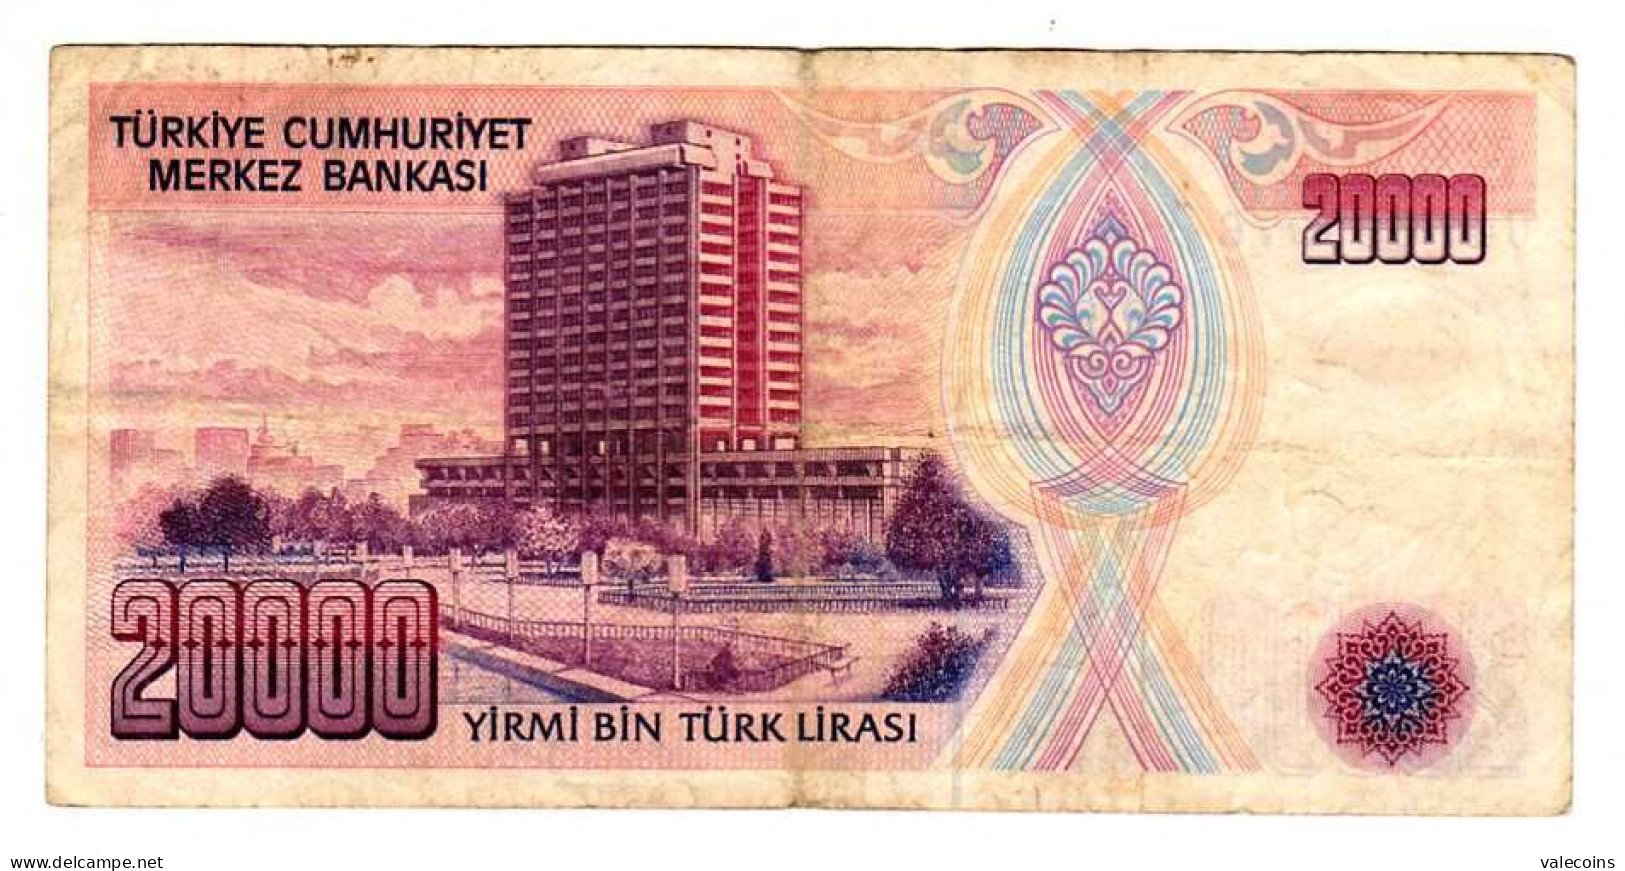 TURCHIA TURKEY - 20000 Lira - ND (1988) - P. 201 - Red And Blue Ornament - XF - Turquie